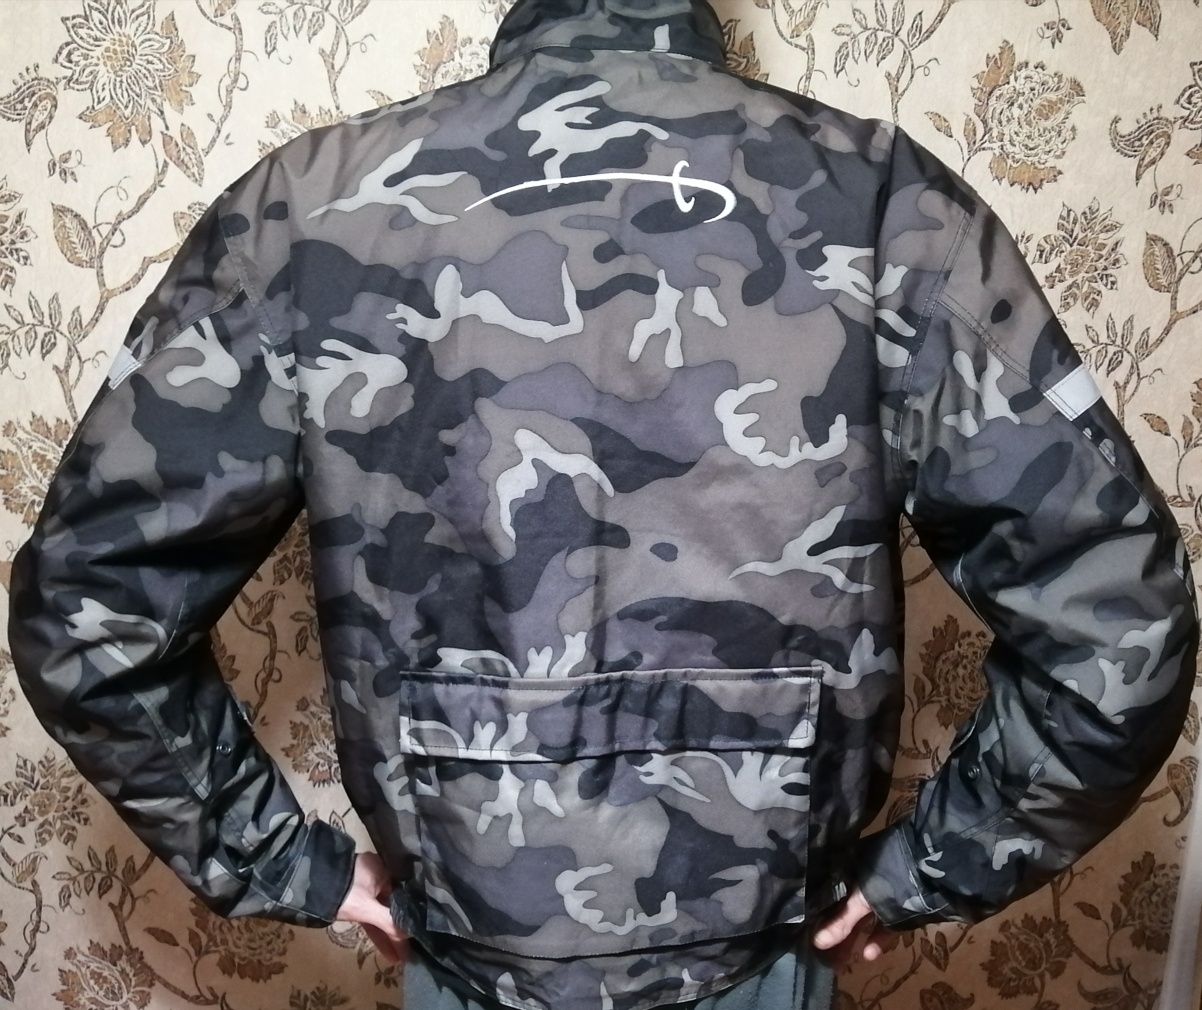 Мотокуртка Spada, XL мото куртка мужская хаки камуфляжная